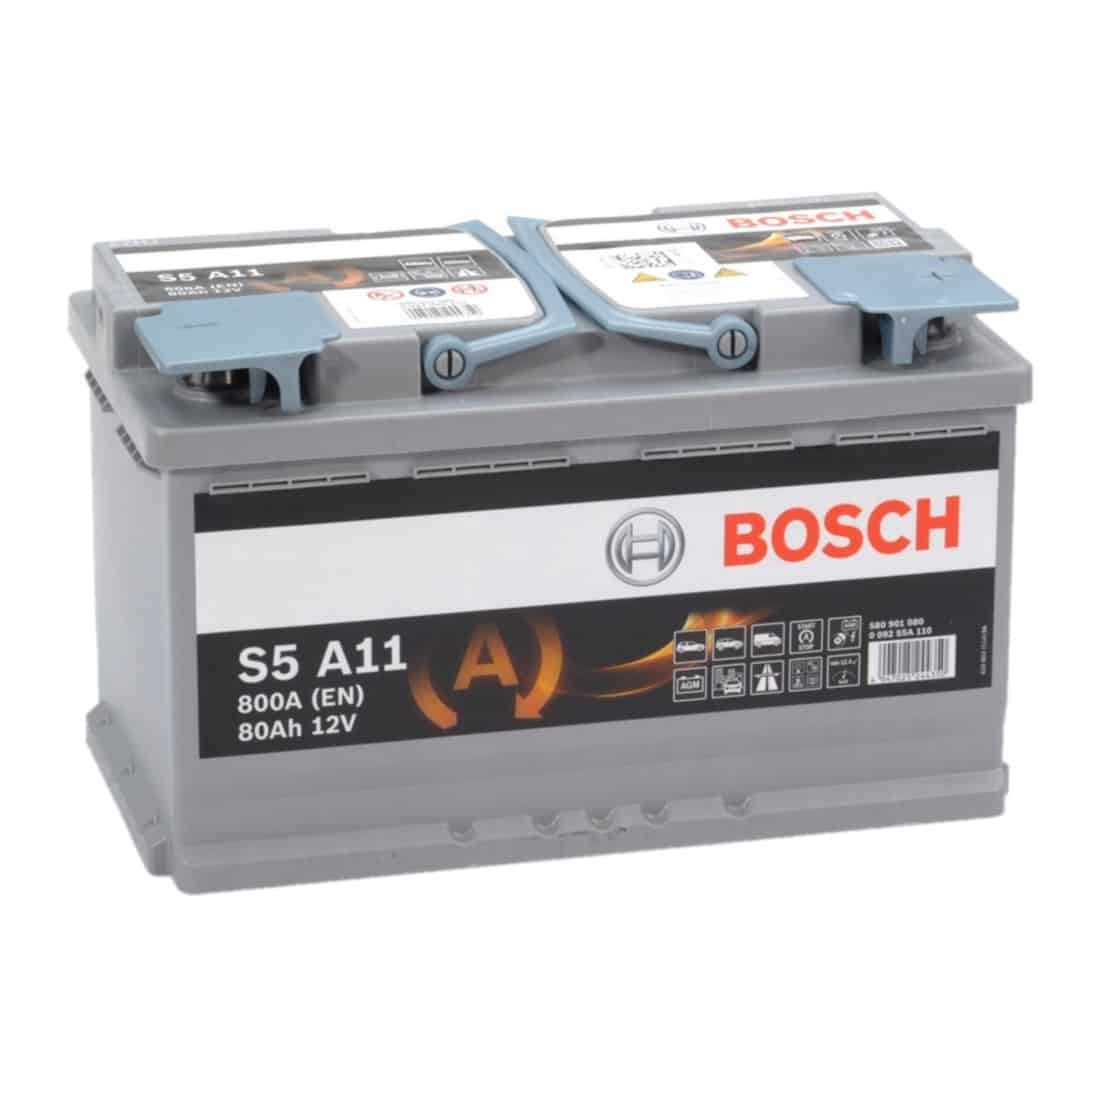 S5A11 Heavy Duty Bosch Car Van Battery 12V 80AH 800A, 3 Years